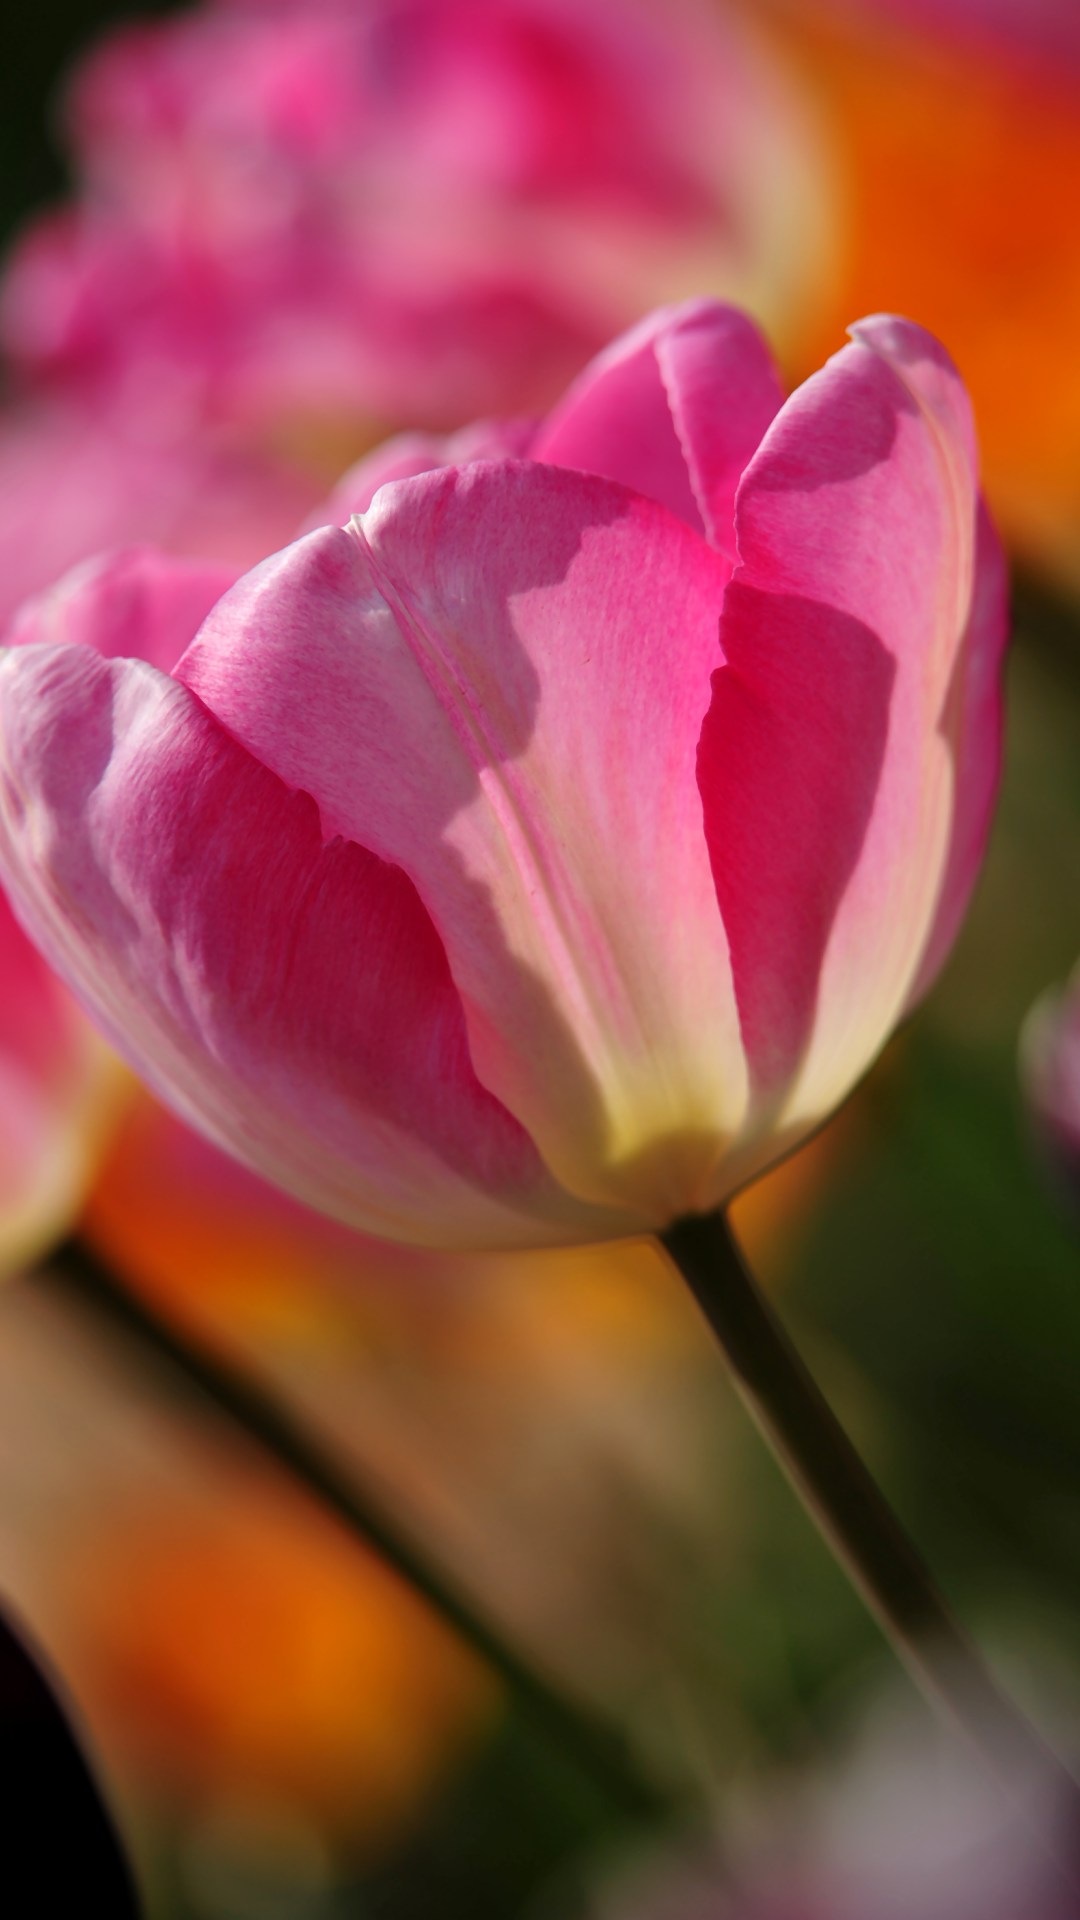 gambar für hintergrundbild,blütenblatt,blühende pflanze,blume,tulpe,rosa